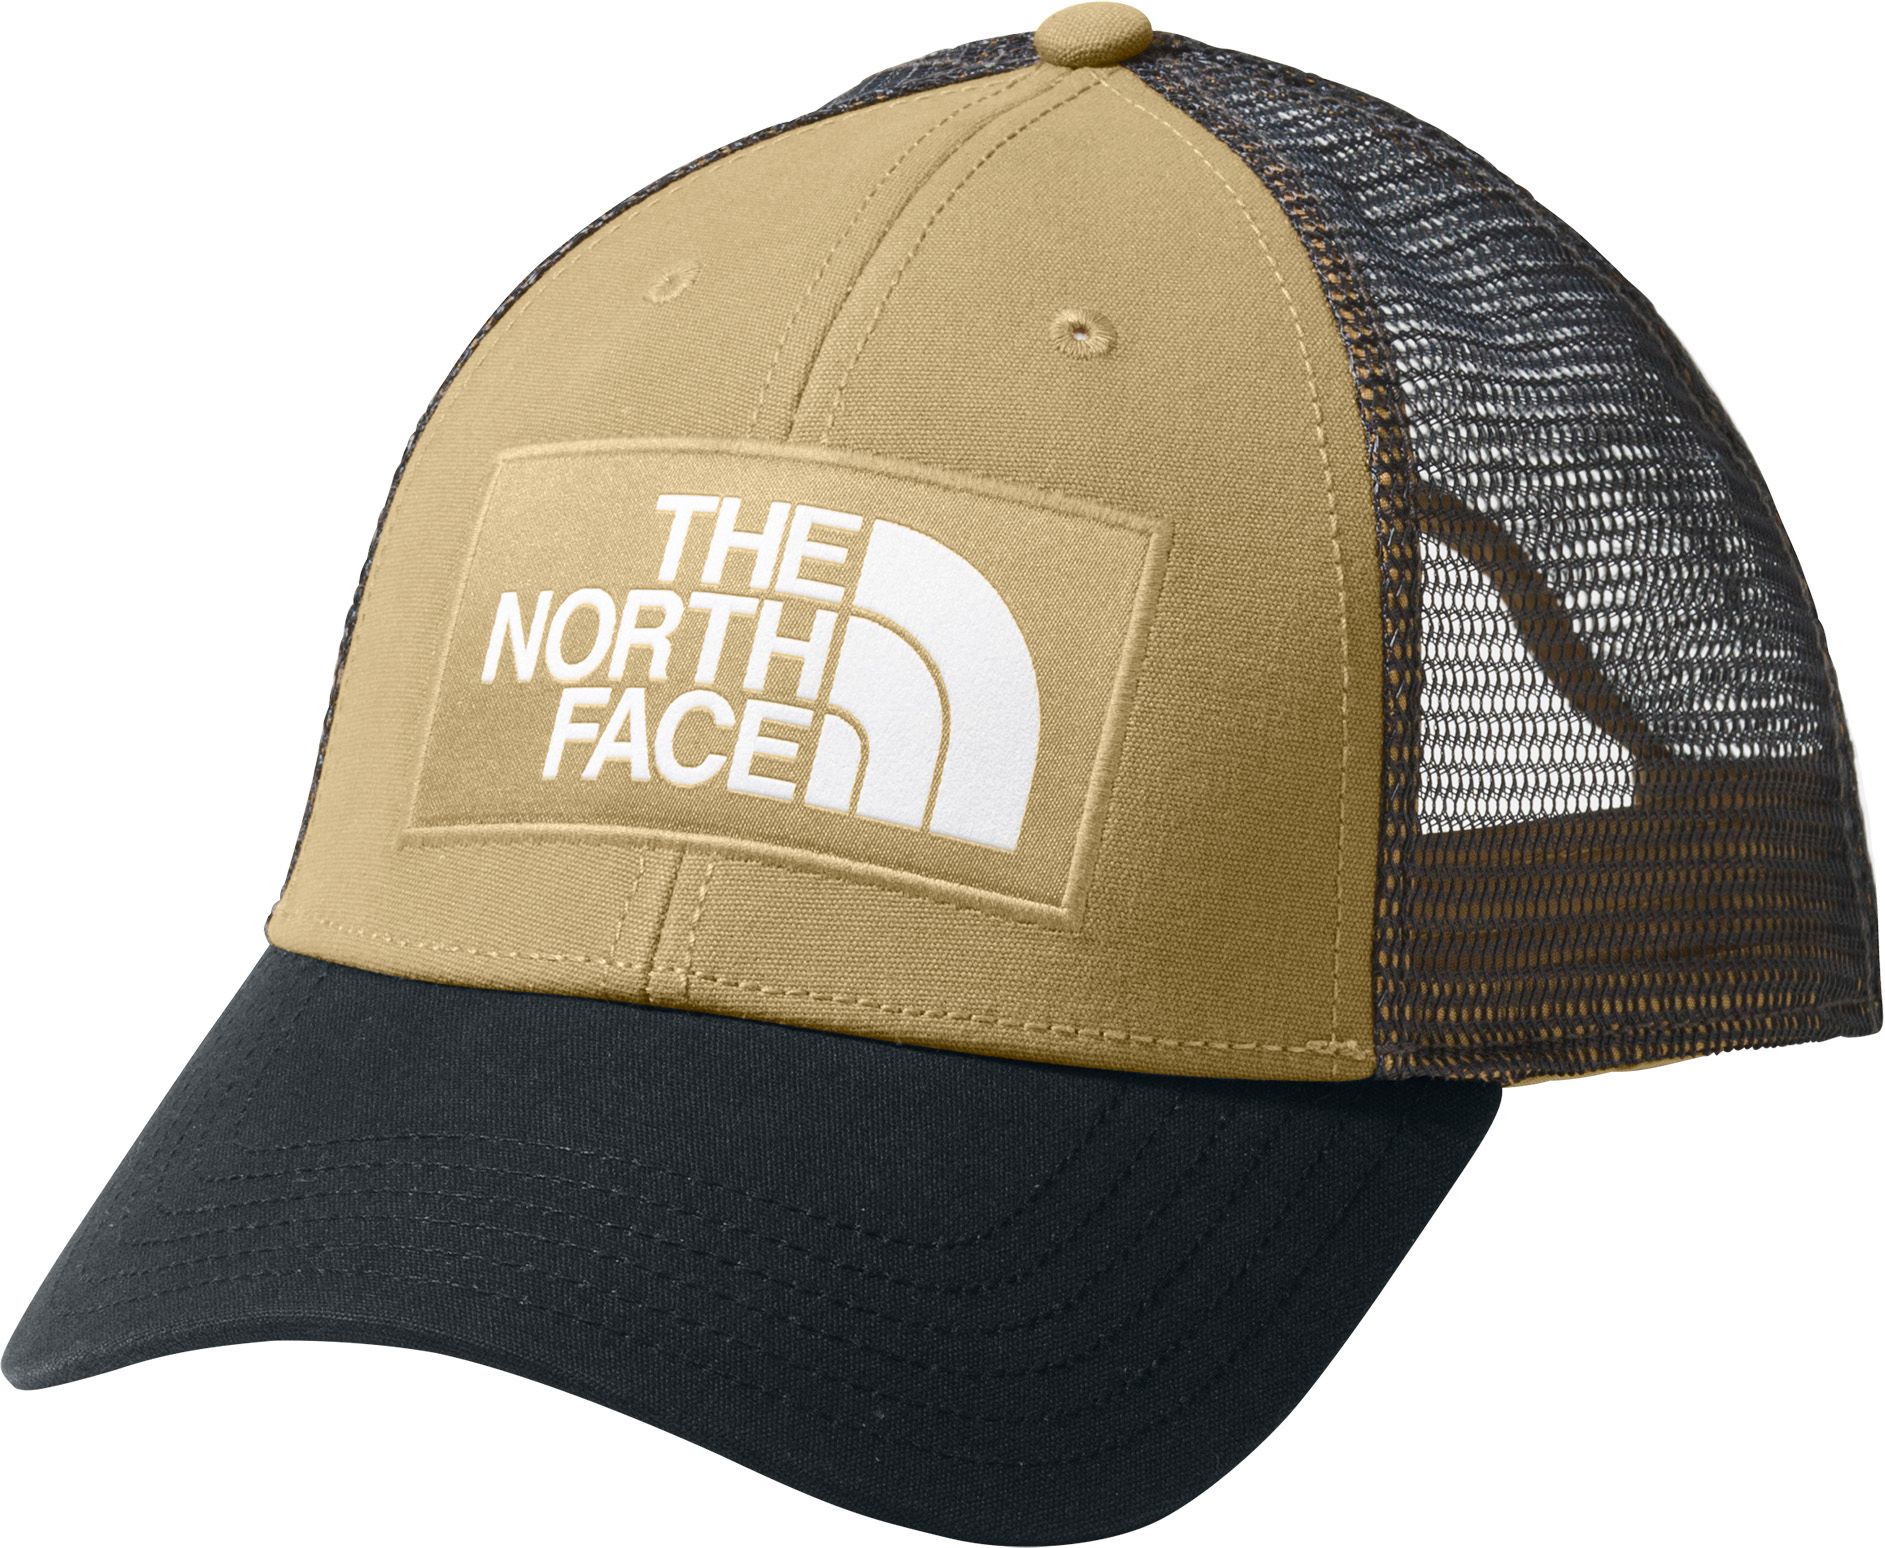 north face hats canada